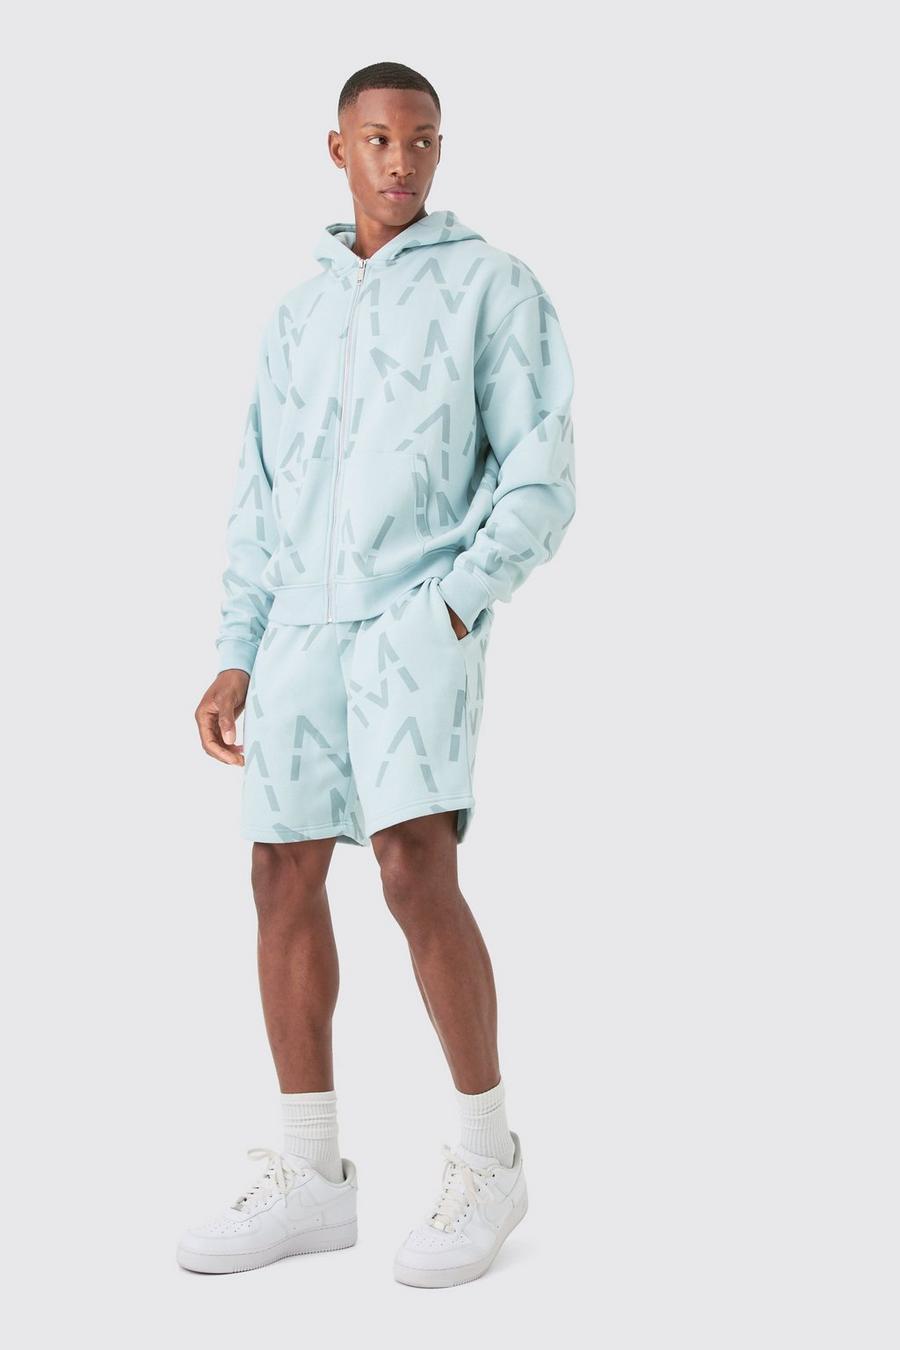 Kurzer kastiger Man Hoodie-Trainingsanzug mit Print und Reißverschluss, Light blue image number 1